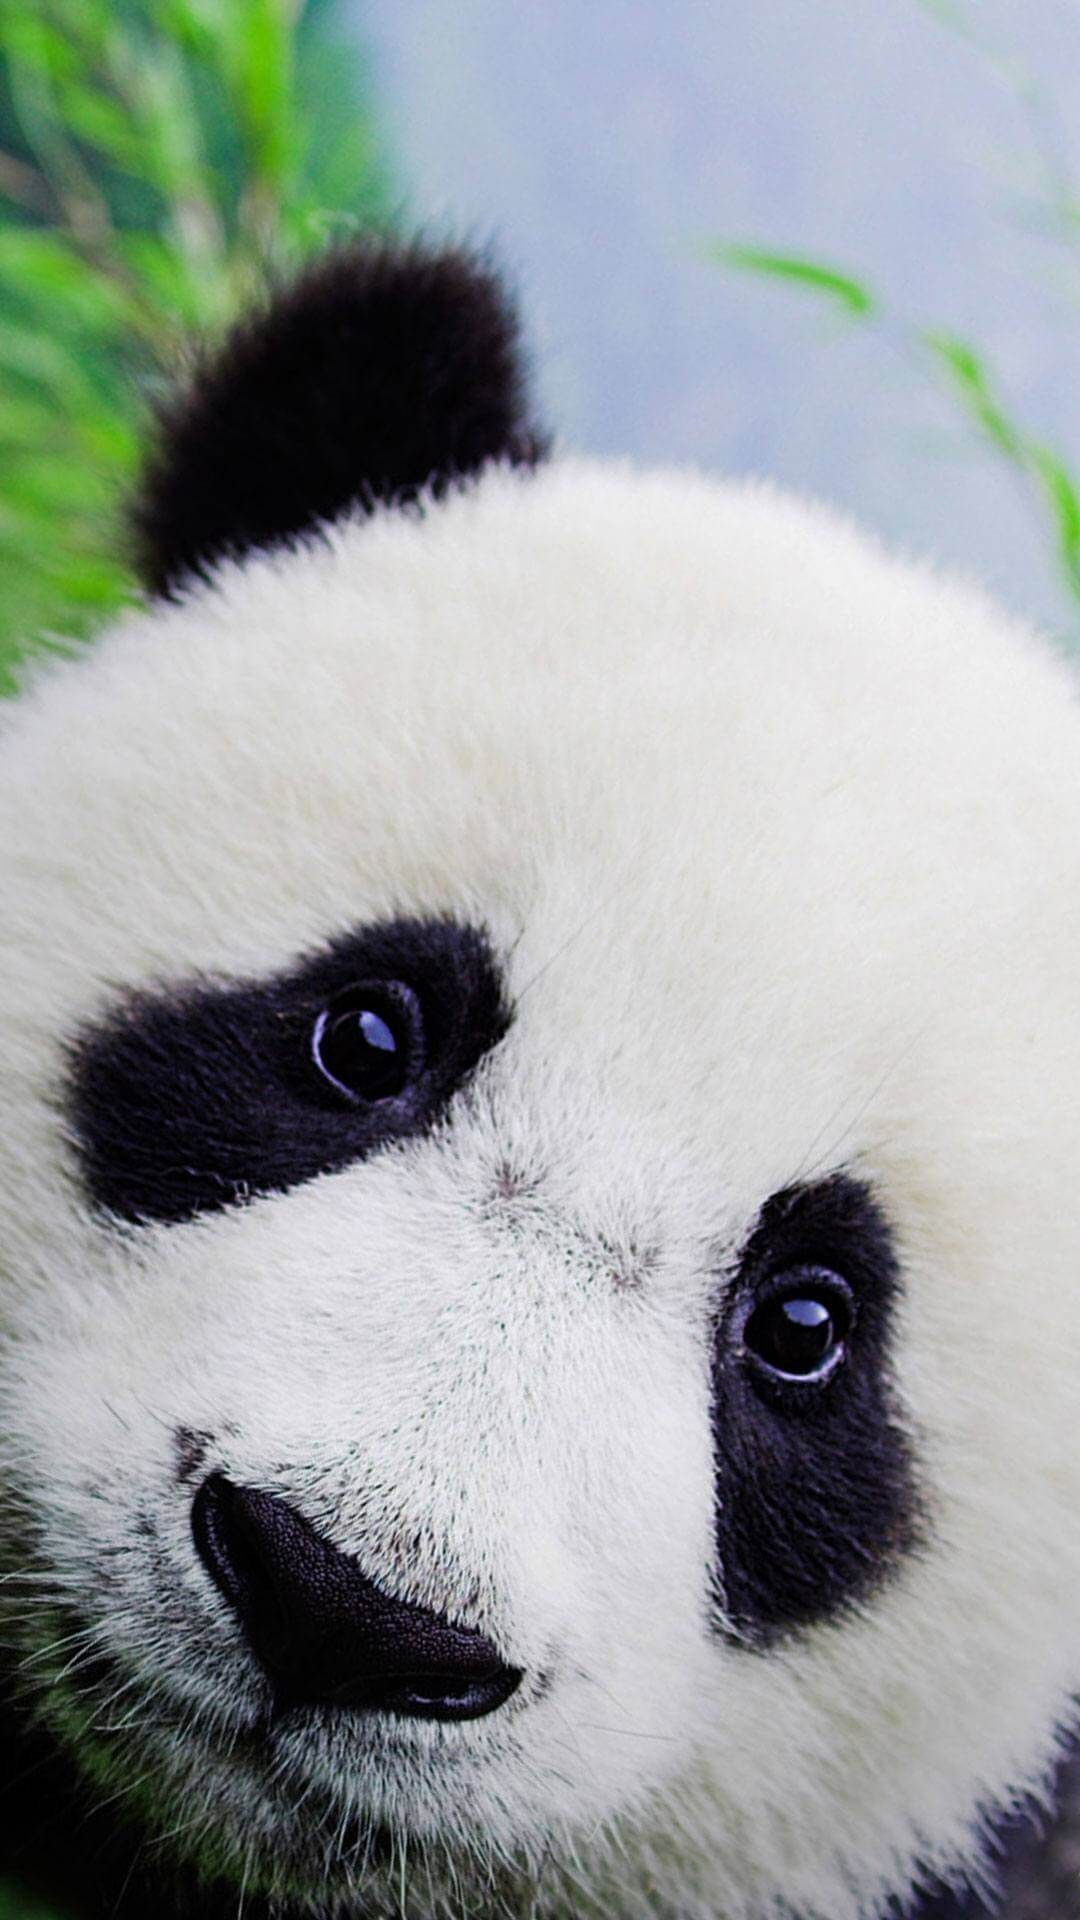 2850 Tiere / Vögel Bilder, HD Fotos (1080p), Hintergrundbilder (Android / IPhone) (2019) #Andr. Panda Wallpaper, Cute Baby Animals, Animal Wallpaper